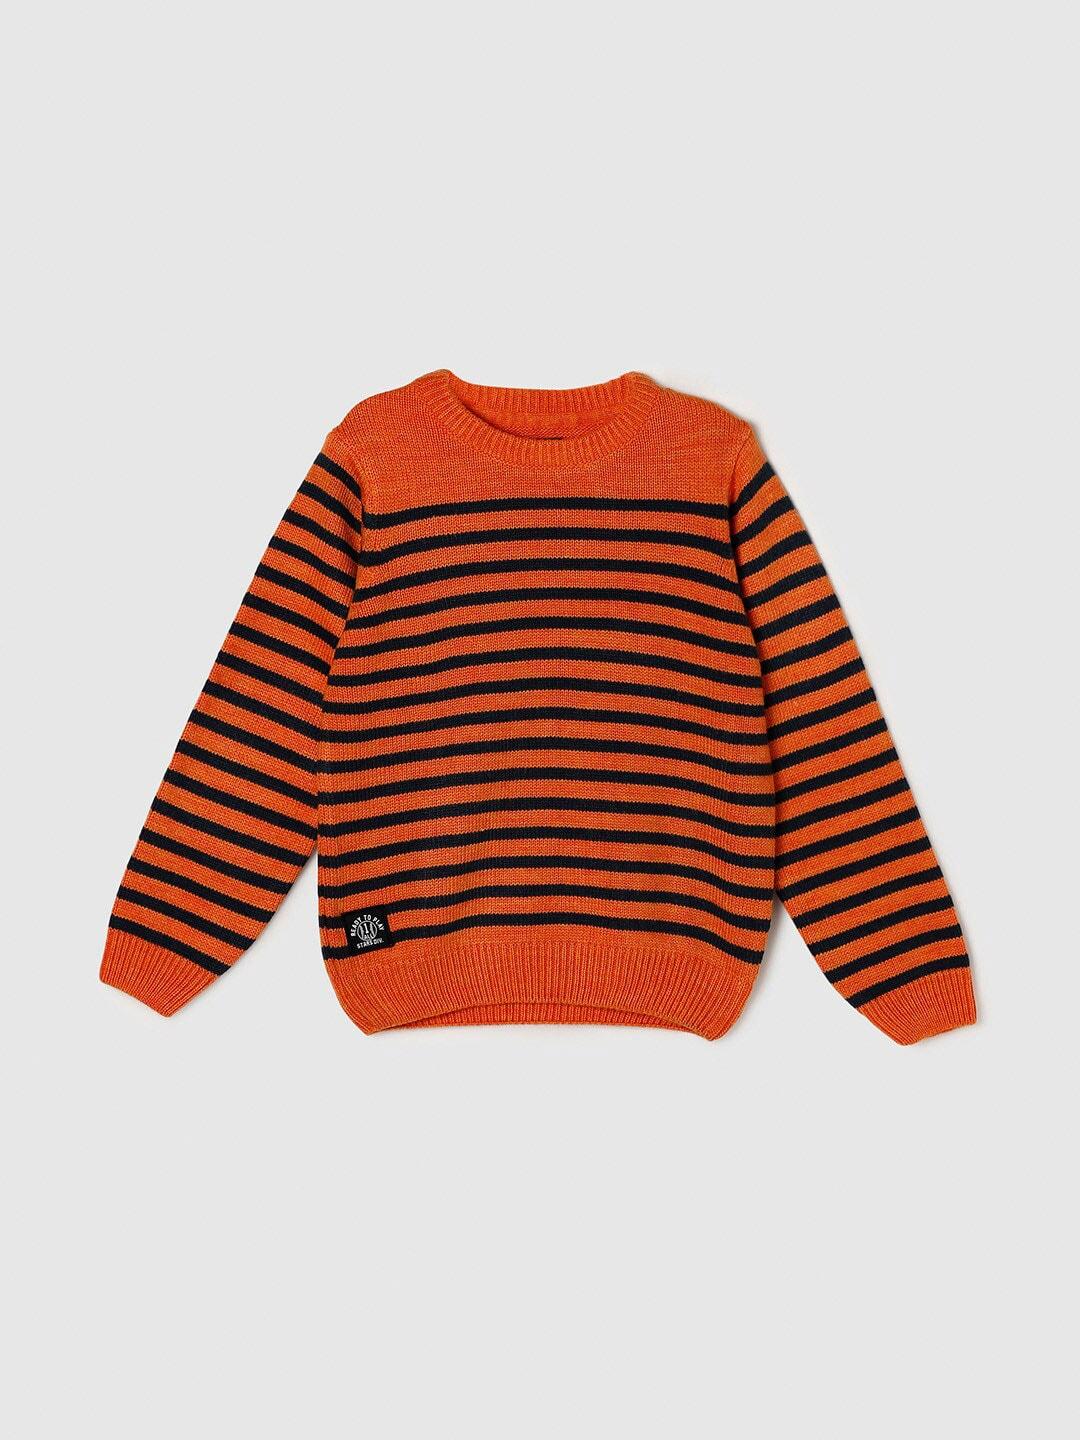 max-boys-orange-&-black-striped-pullover